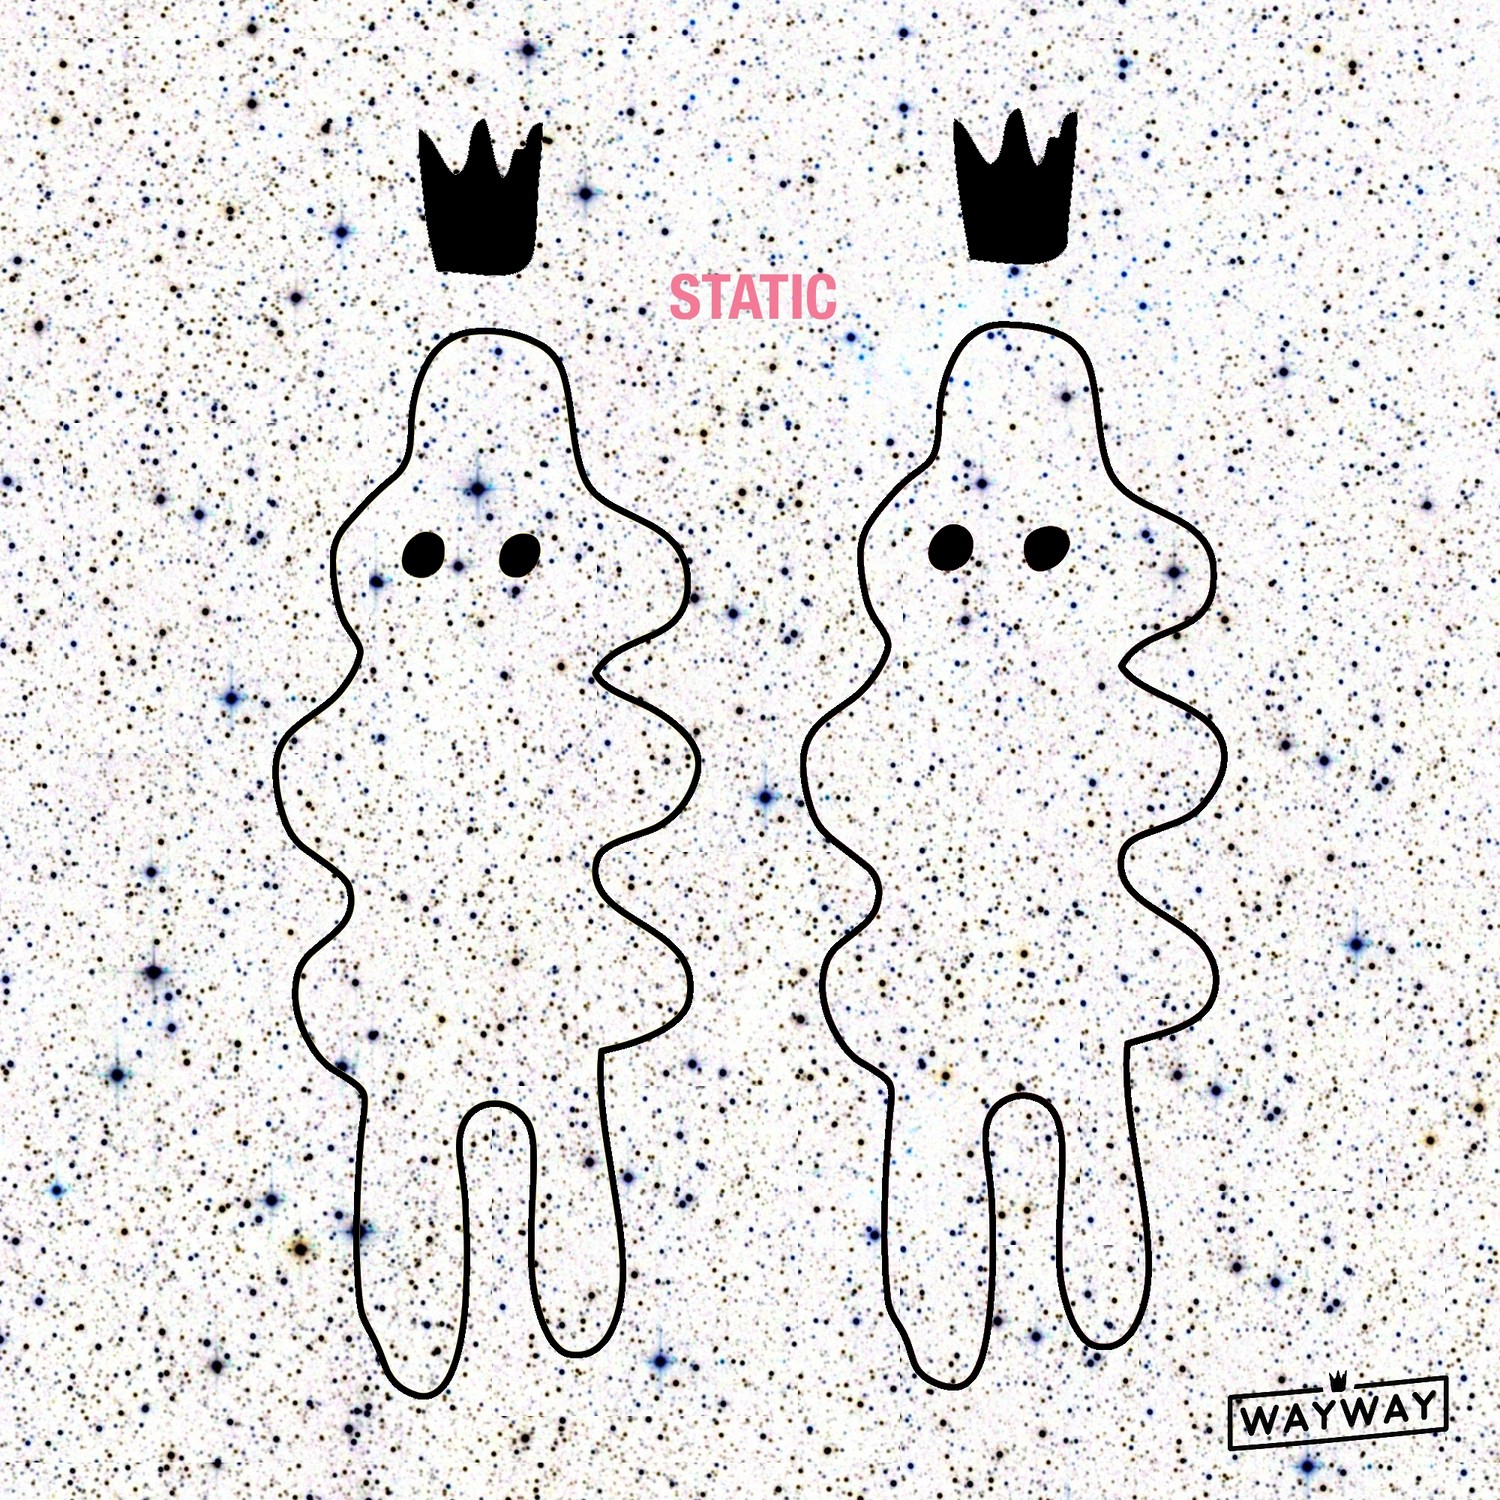 Static (Instrumental)